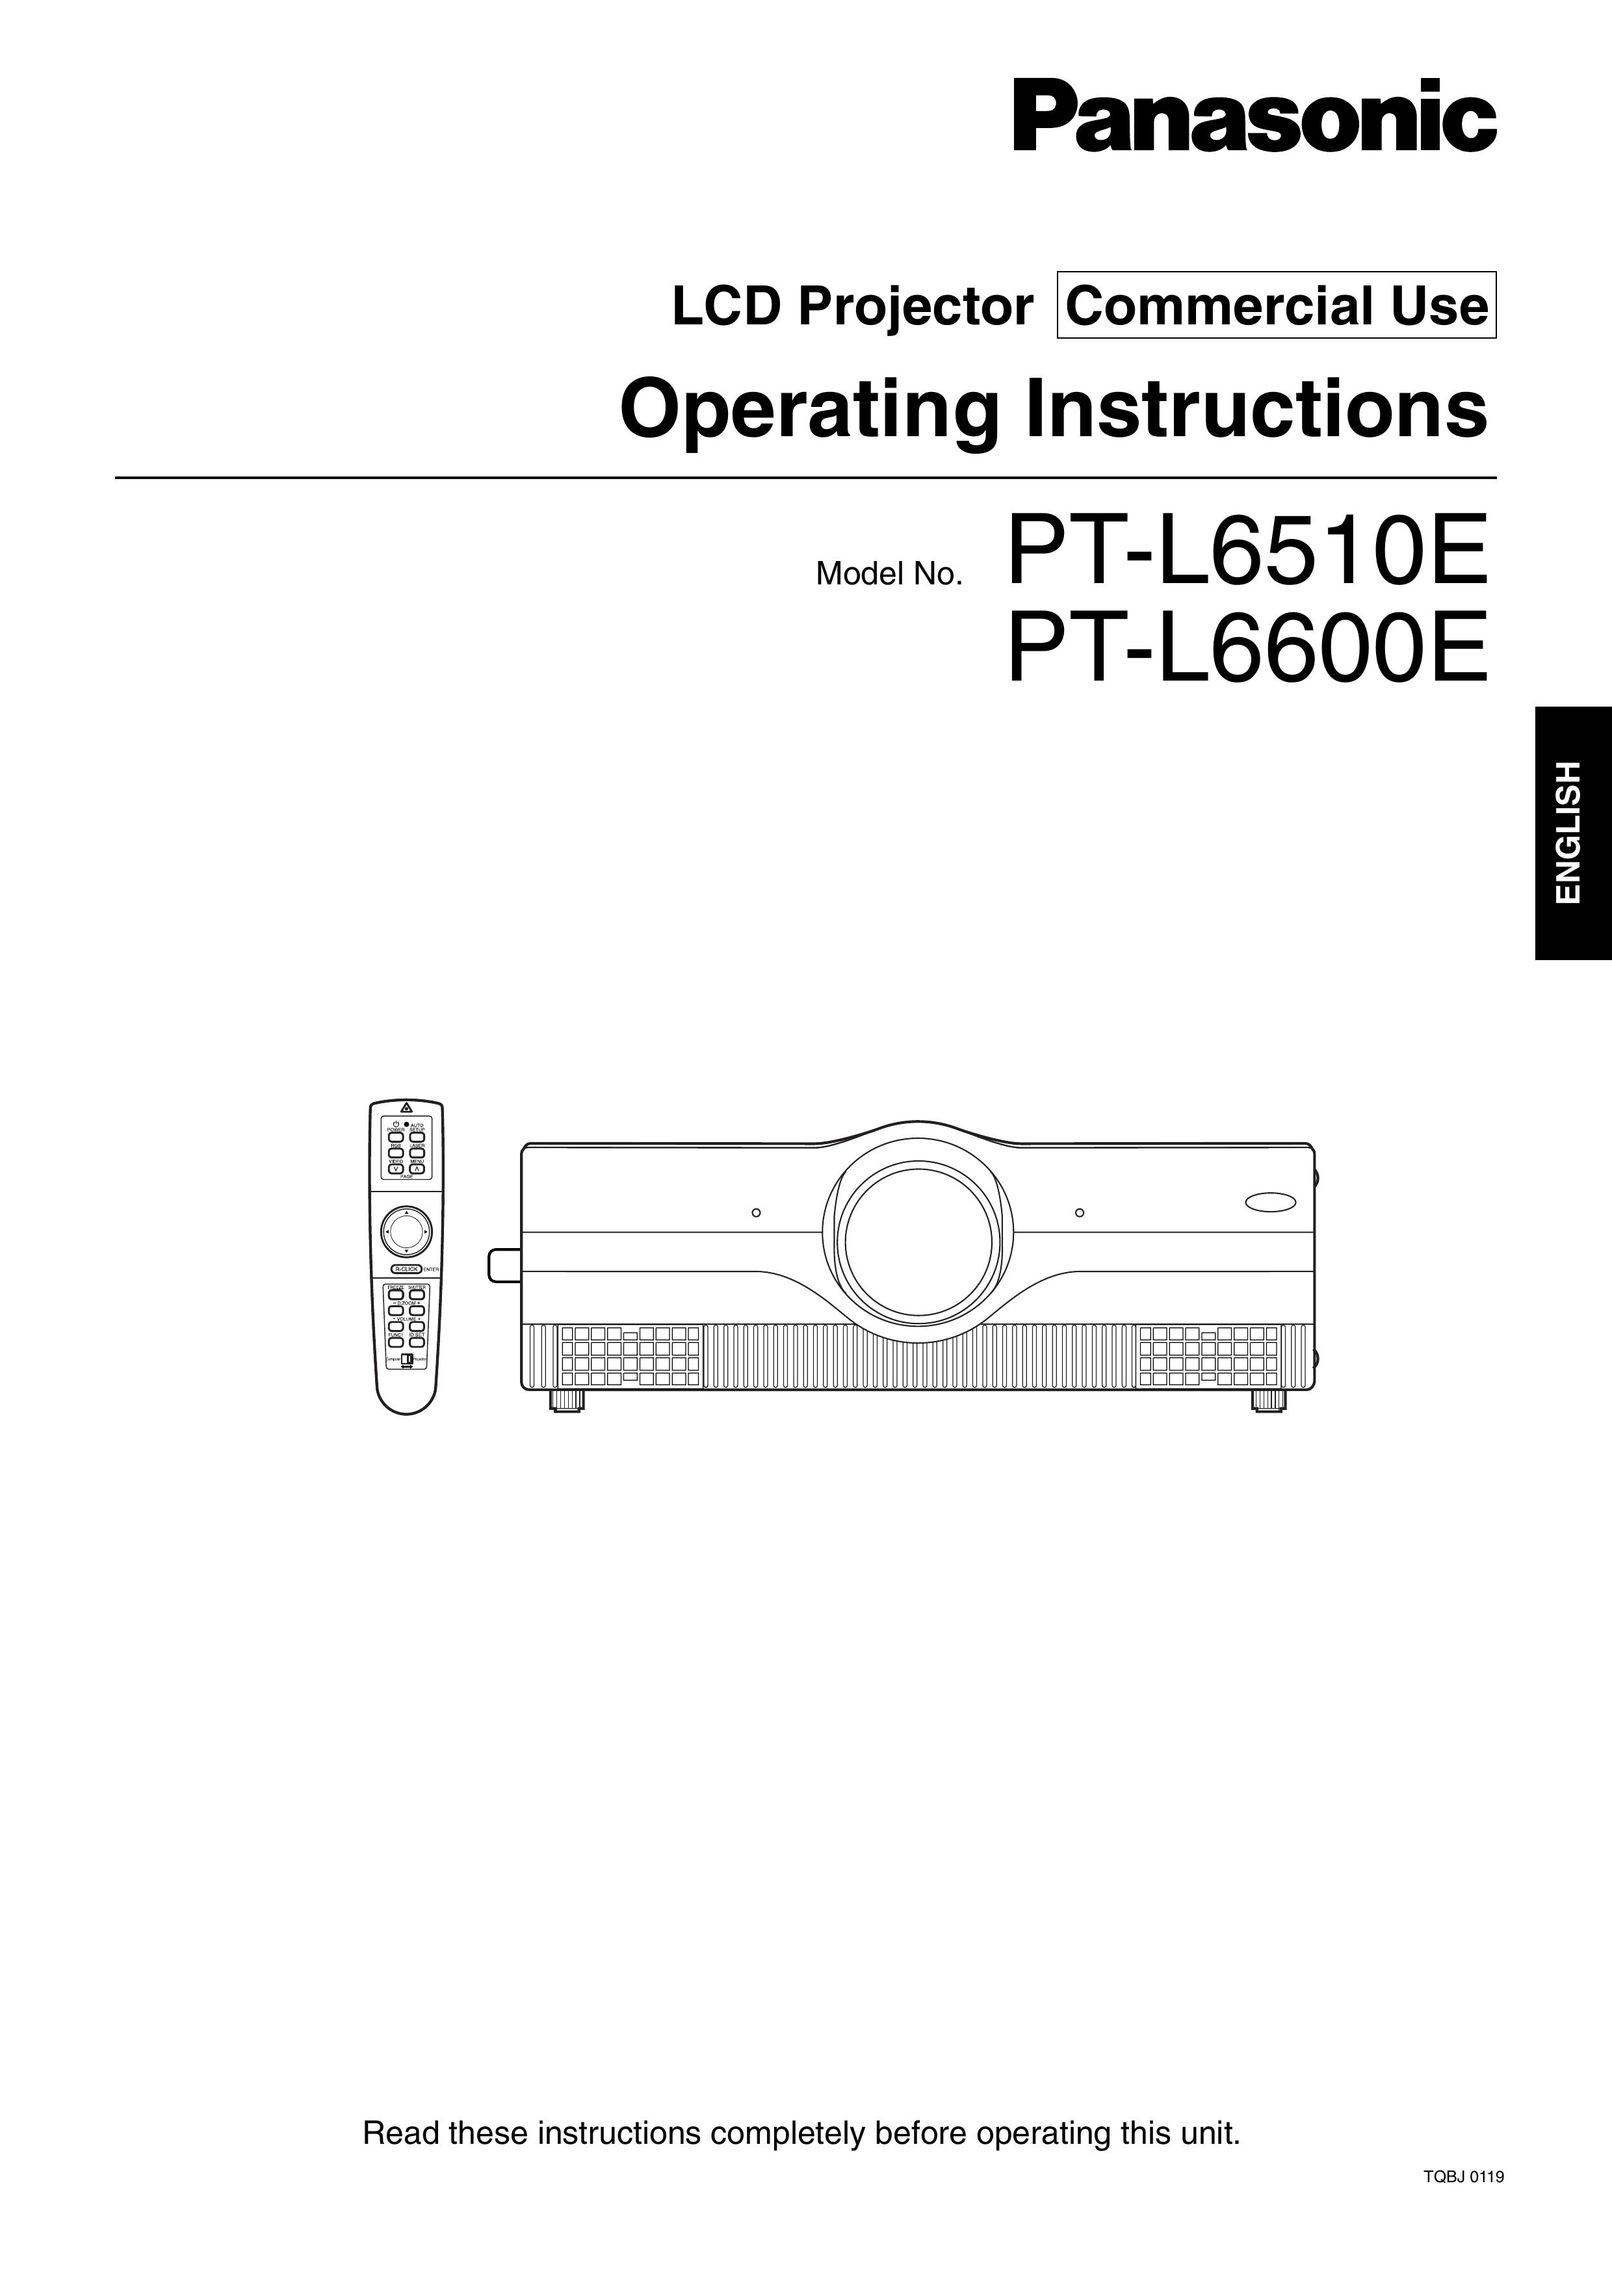 Luce PT-L6600E Projector User Manual